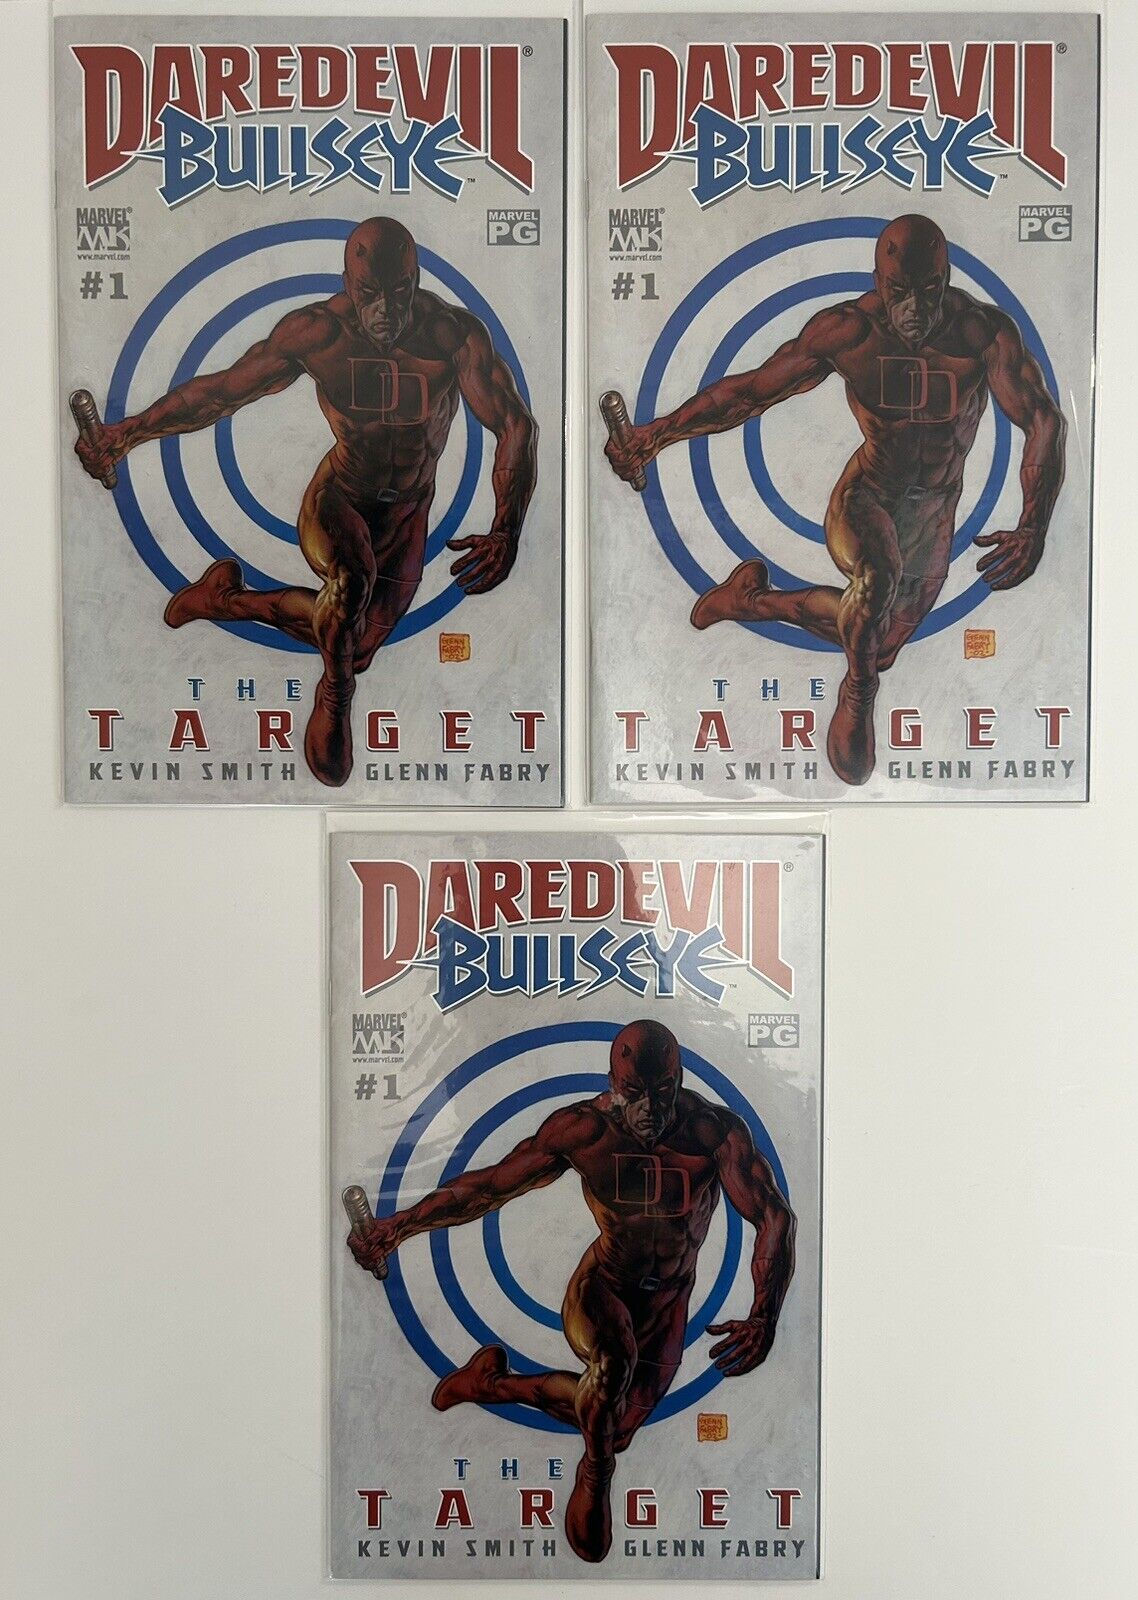 Daredevil Bullseye The Target #1 - 2003 - Marvel - 3 Copies - NM+